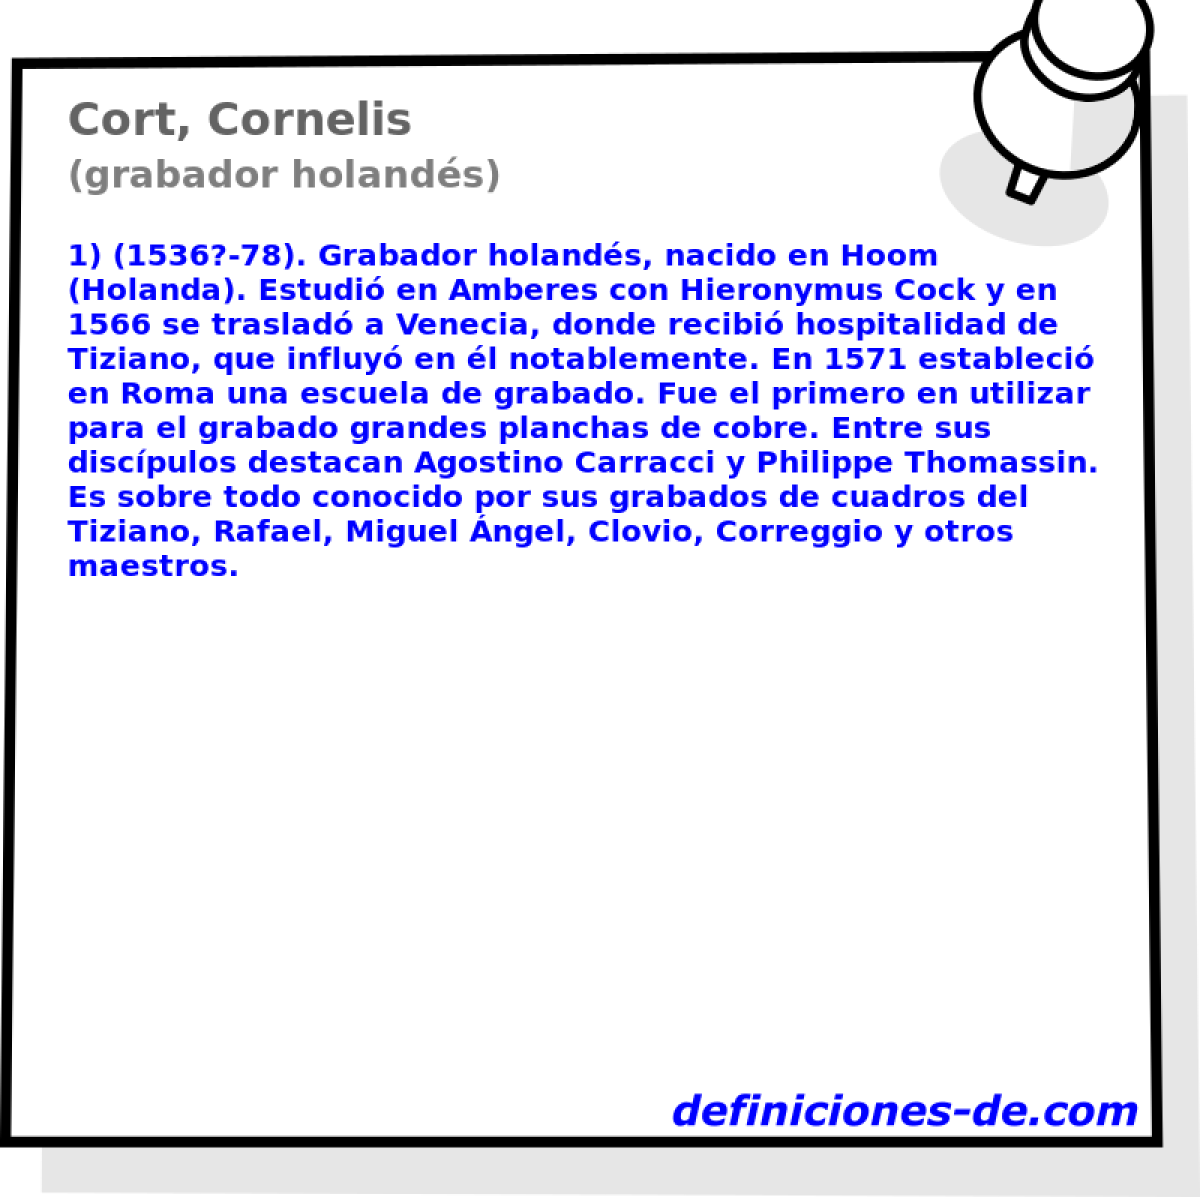 Cort, Cornelis (grabador holands)